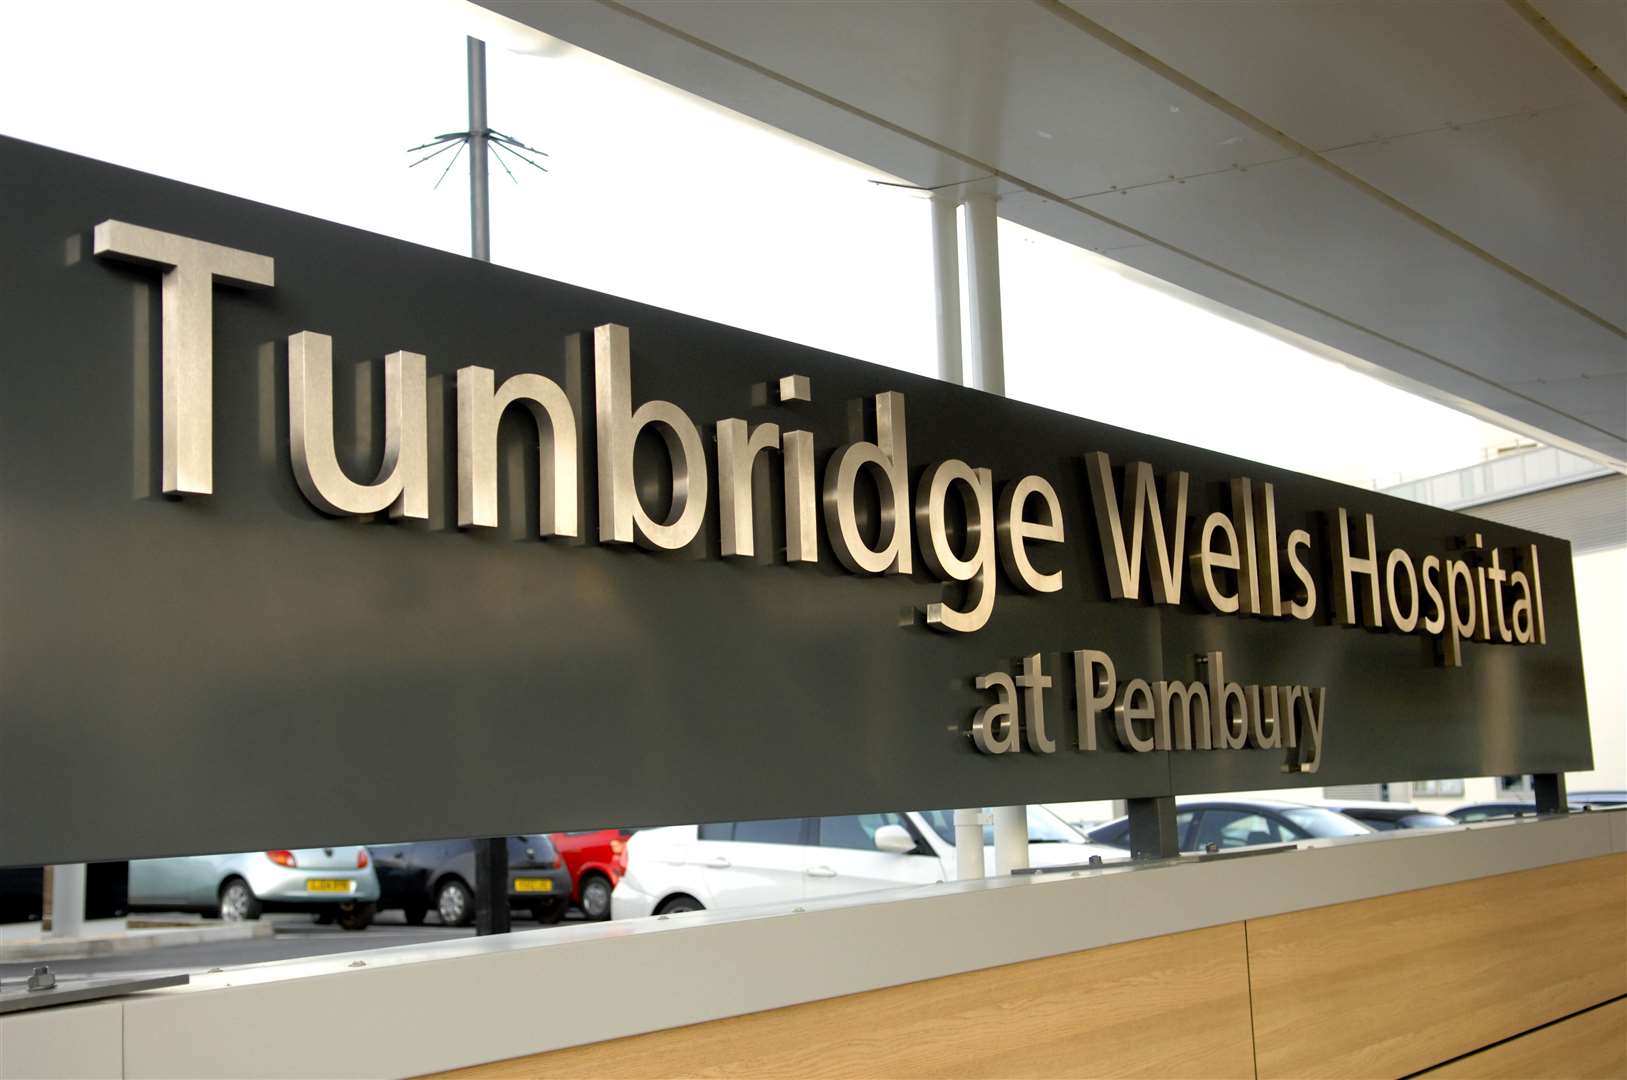 The incident happened at Tunbridge Wells Hospital at Pembury. Picture: Matthew Walker